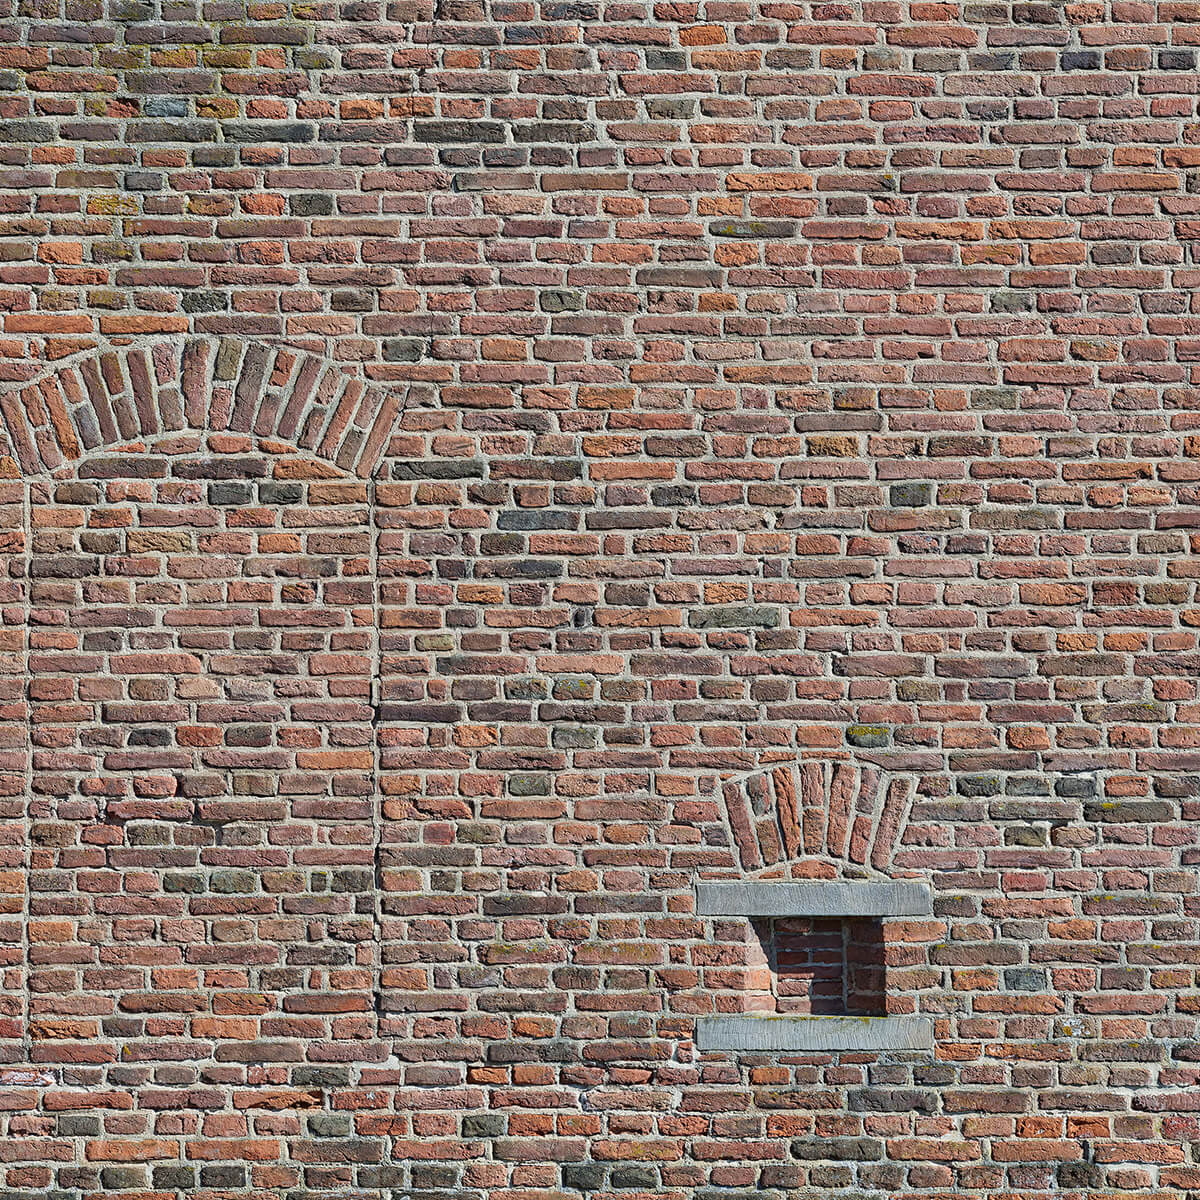 Former window in brick wall